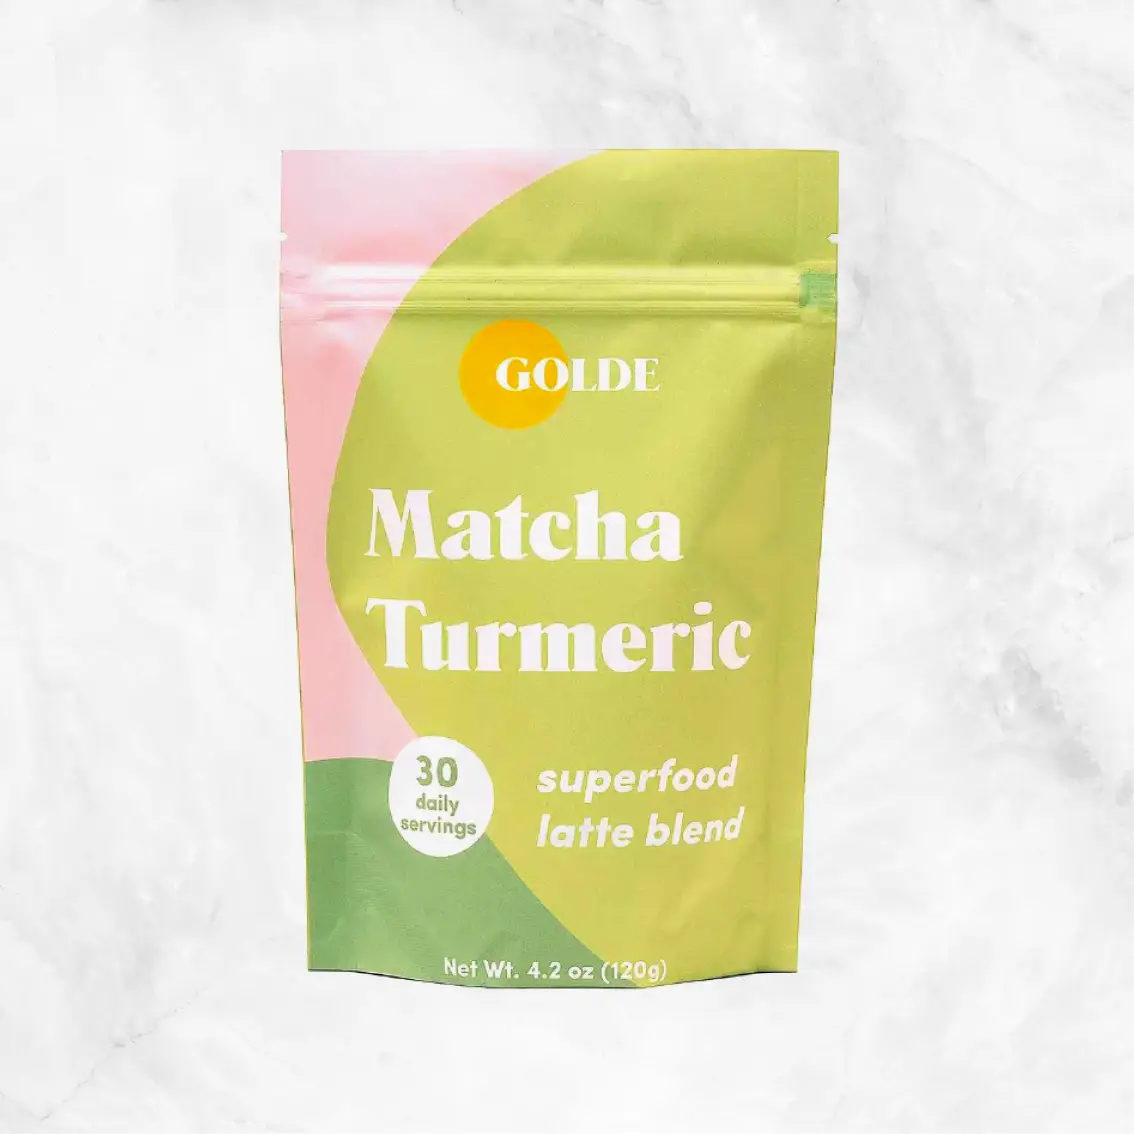 Golde - Matcha Turmeric Latte Blend Delivery